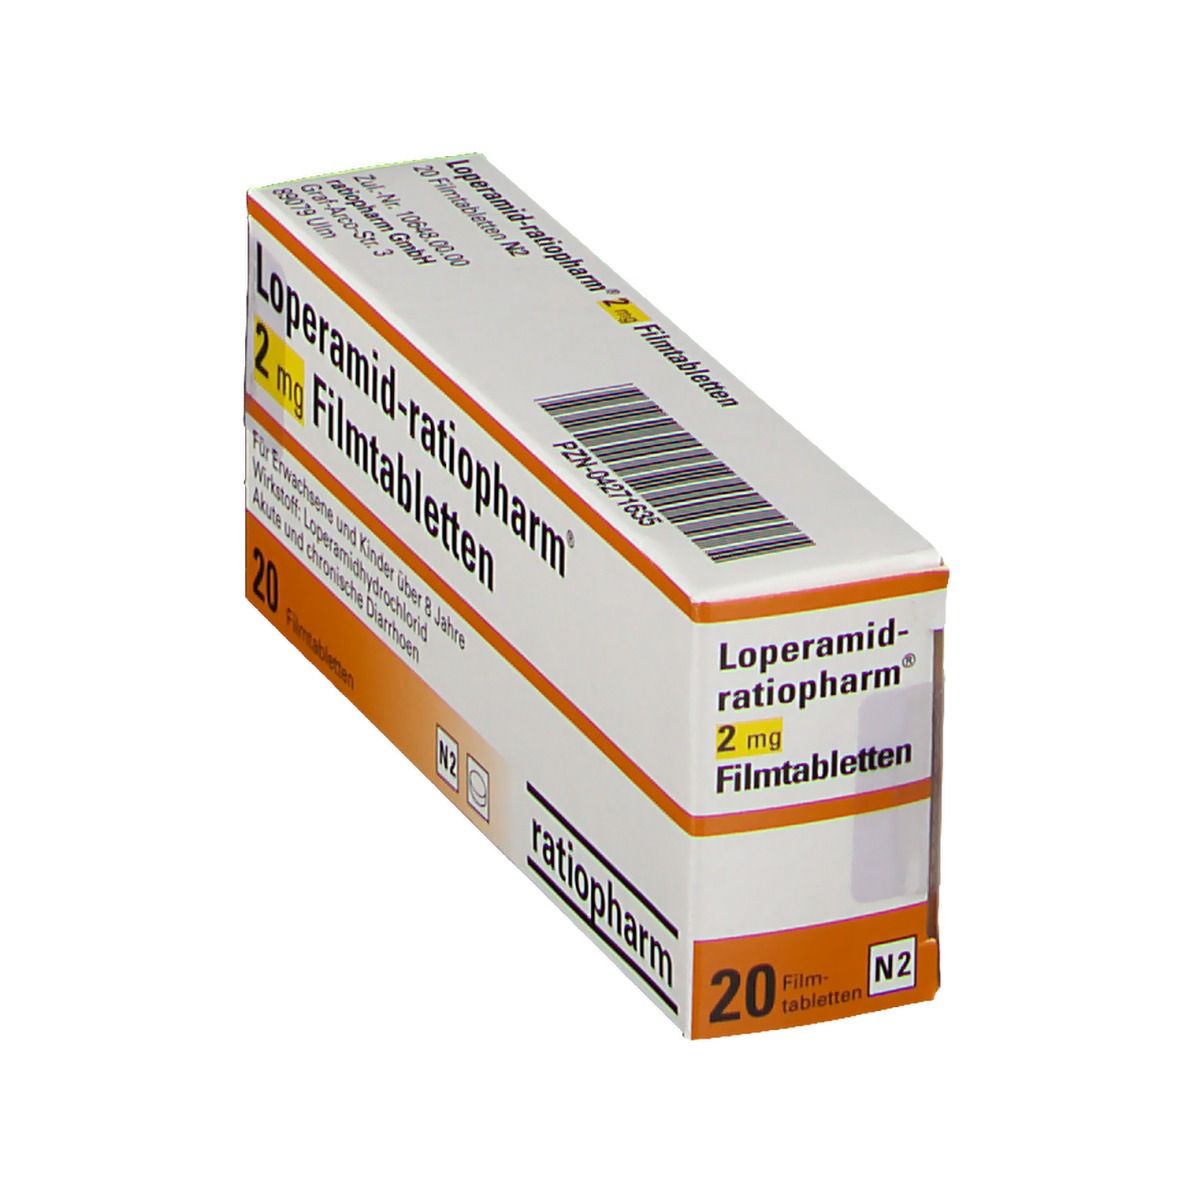 Loperamid-ratiopharm® 2 mg